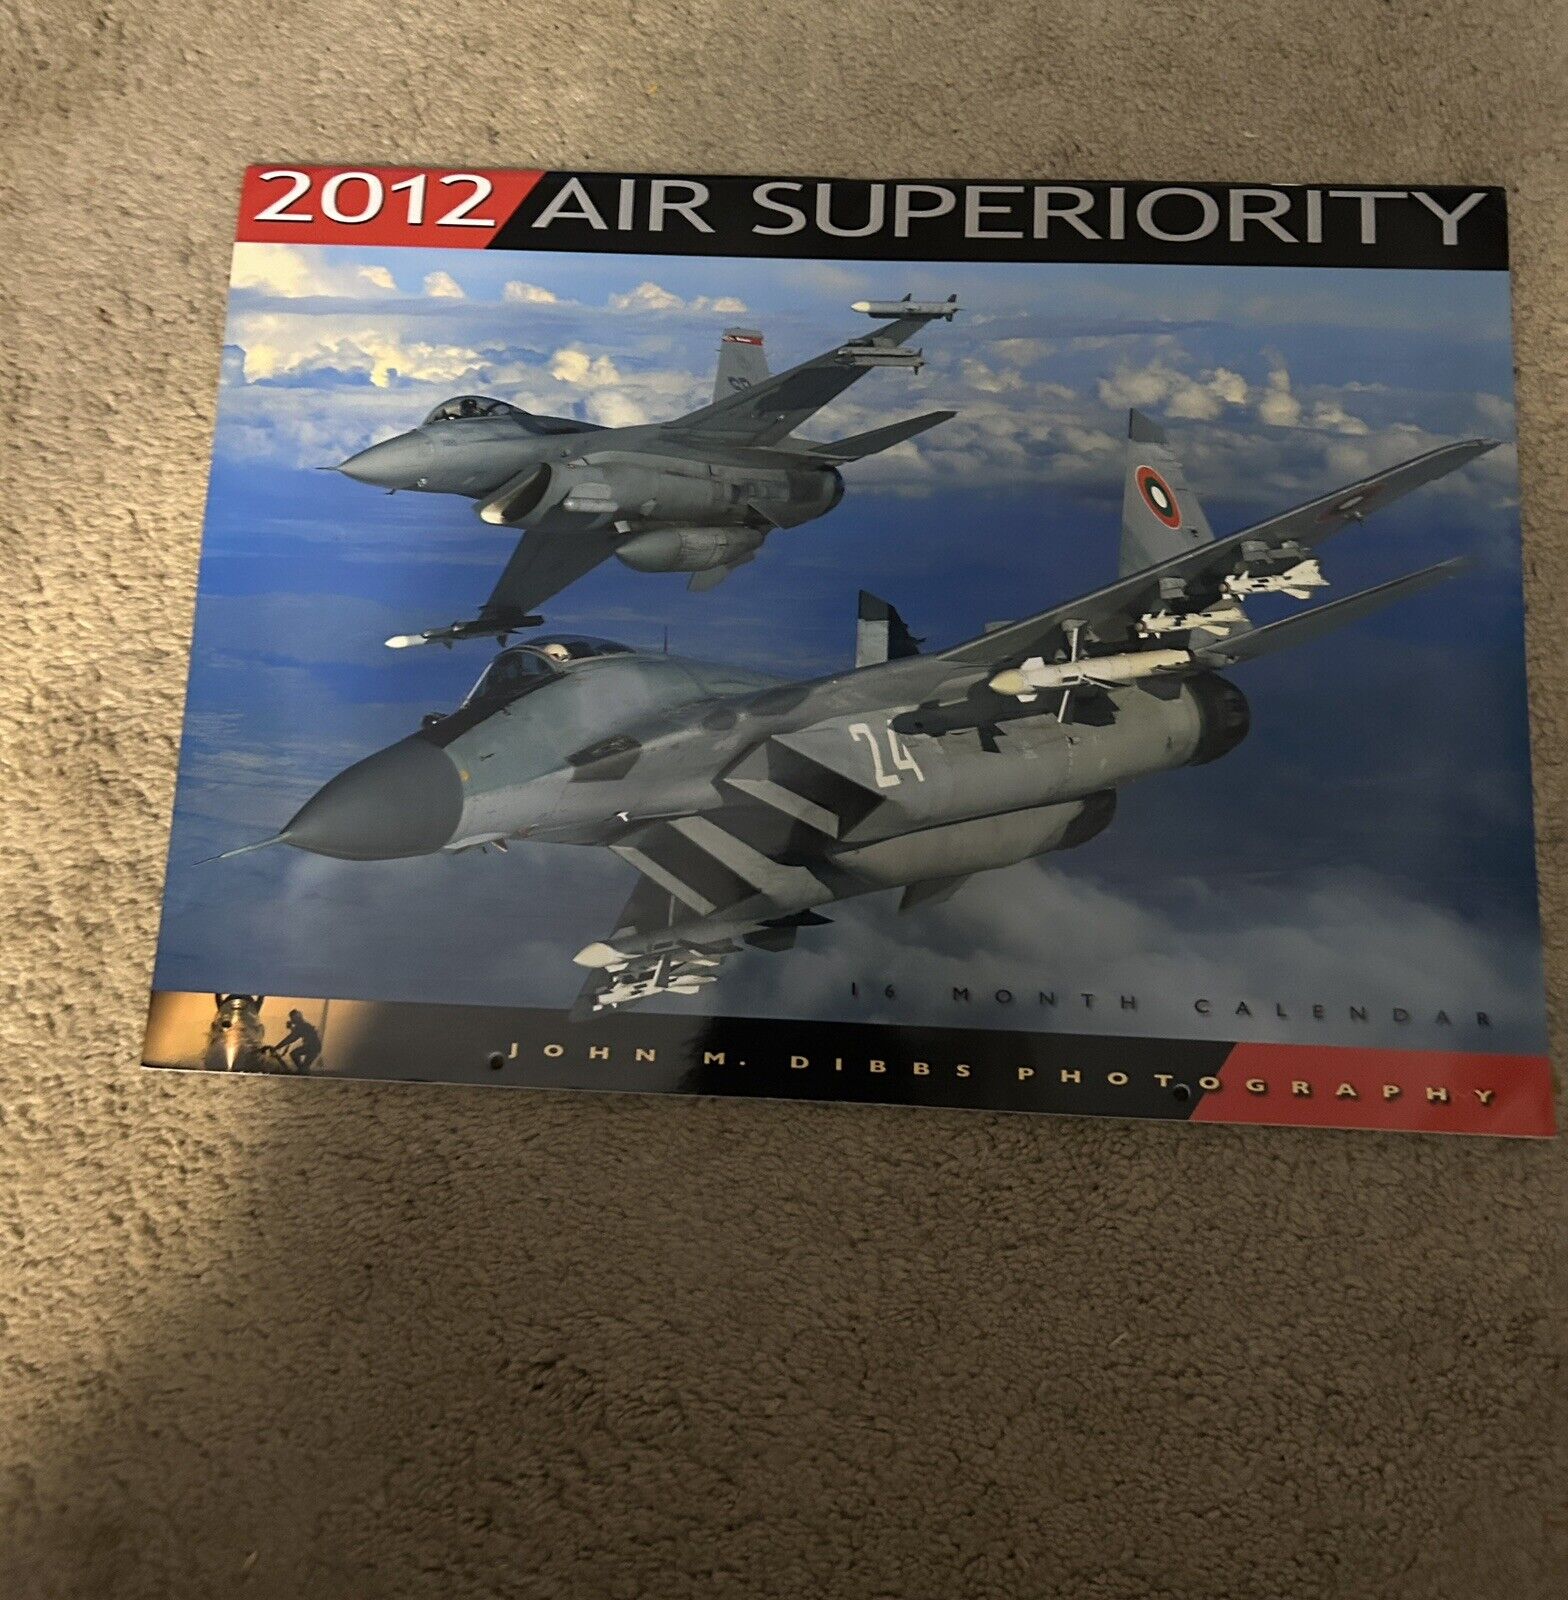 2012 air superiority calendar (16 Months)  By John M Dibbs